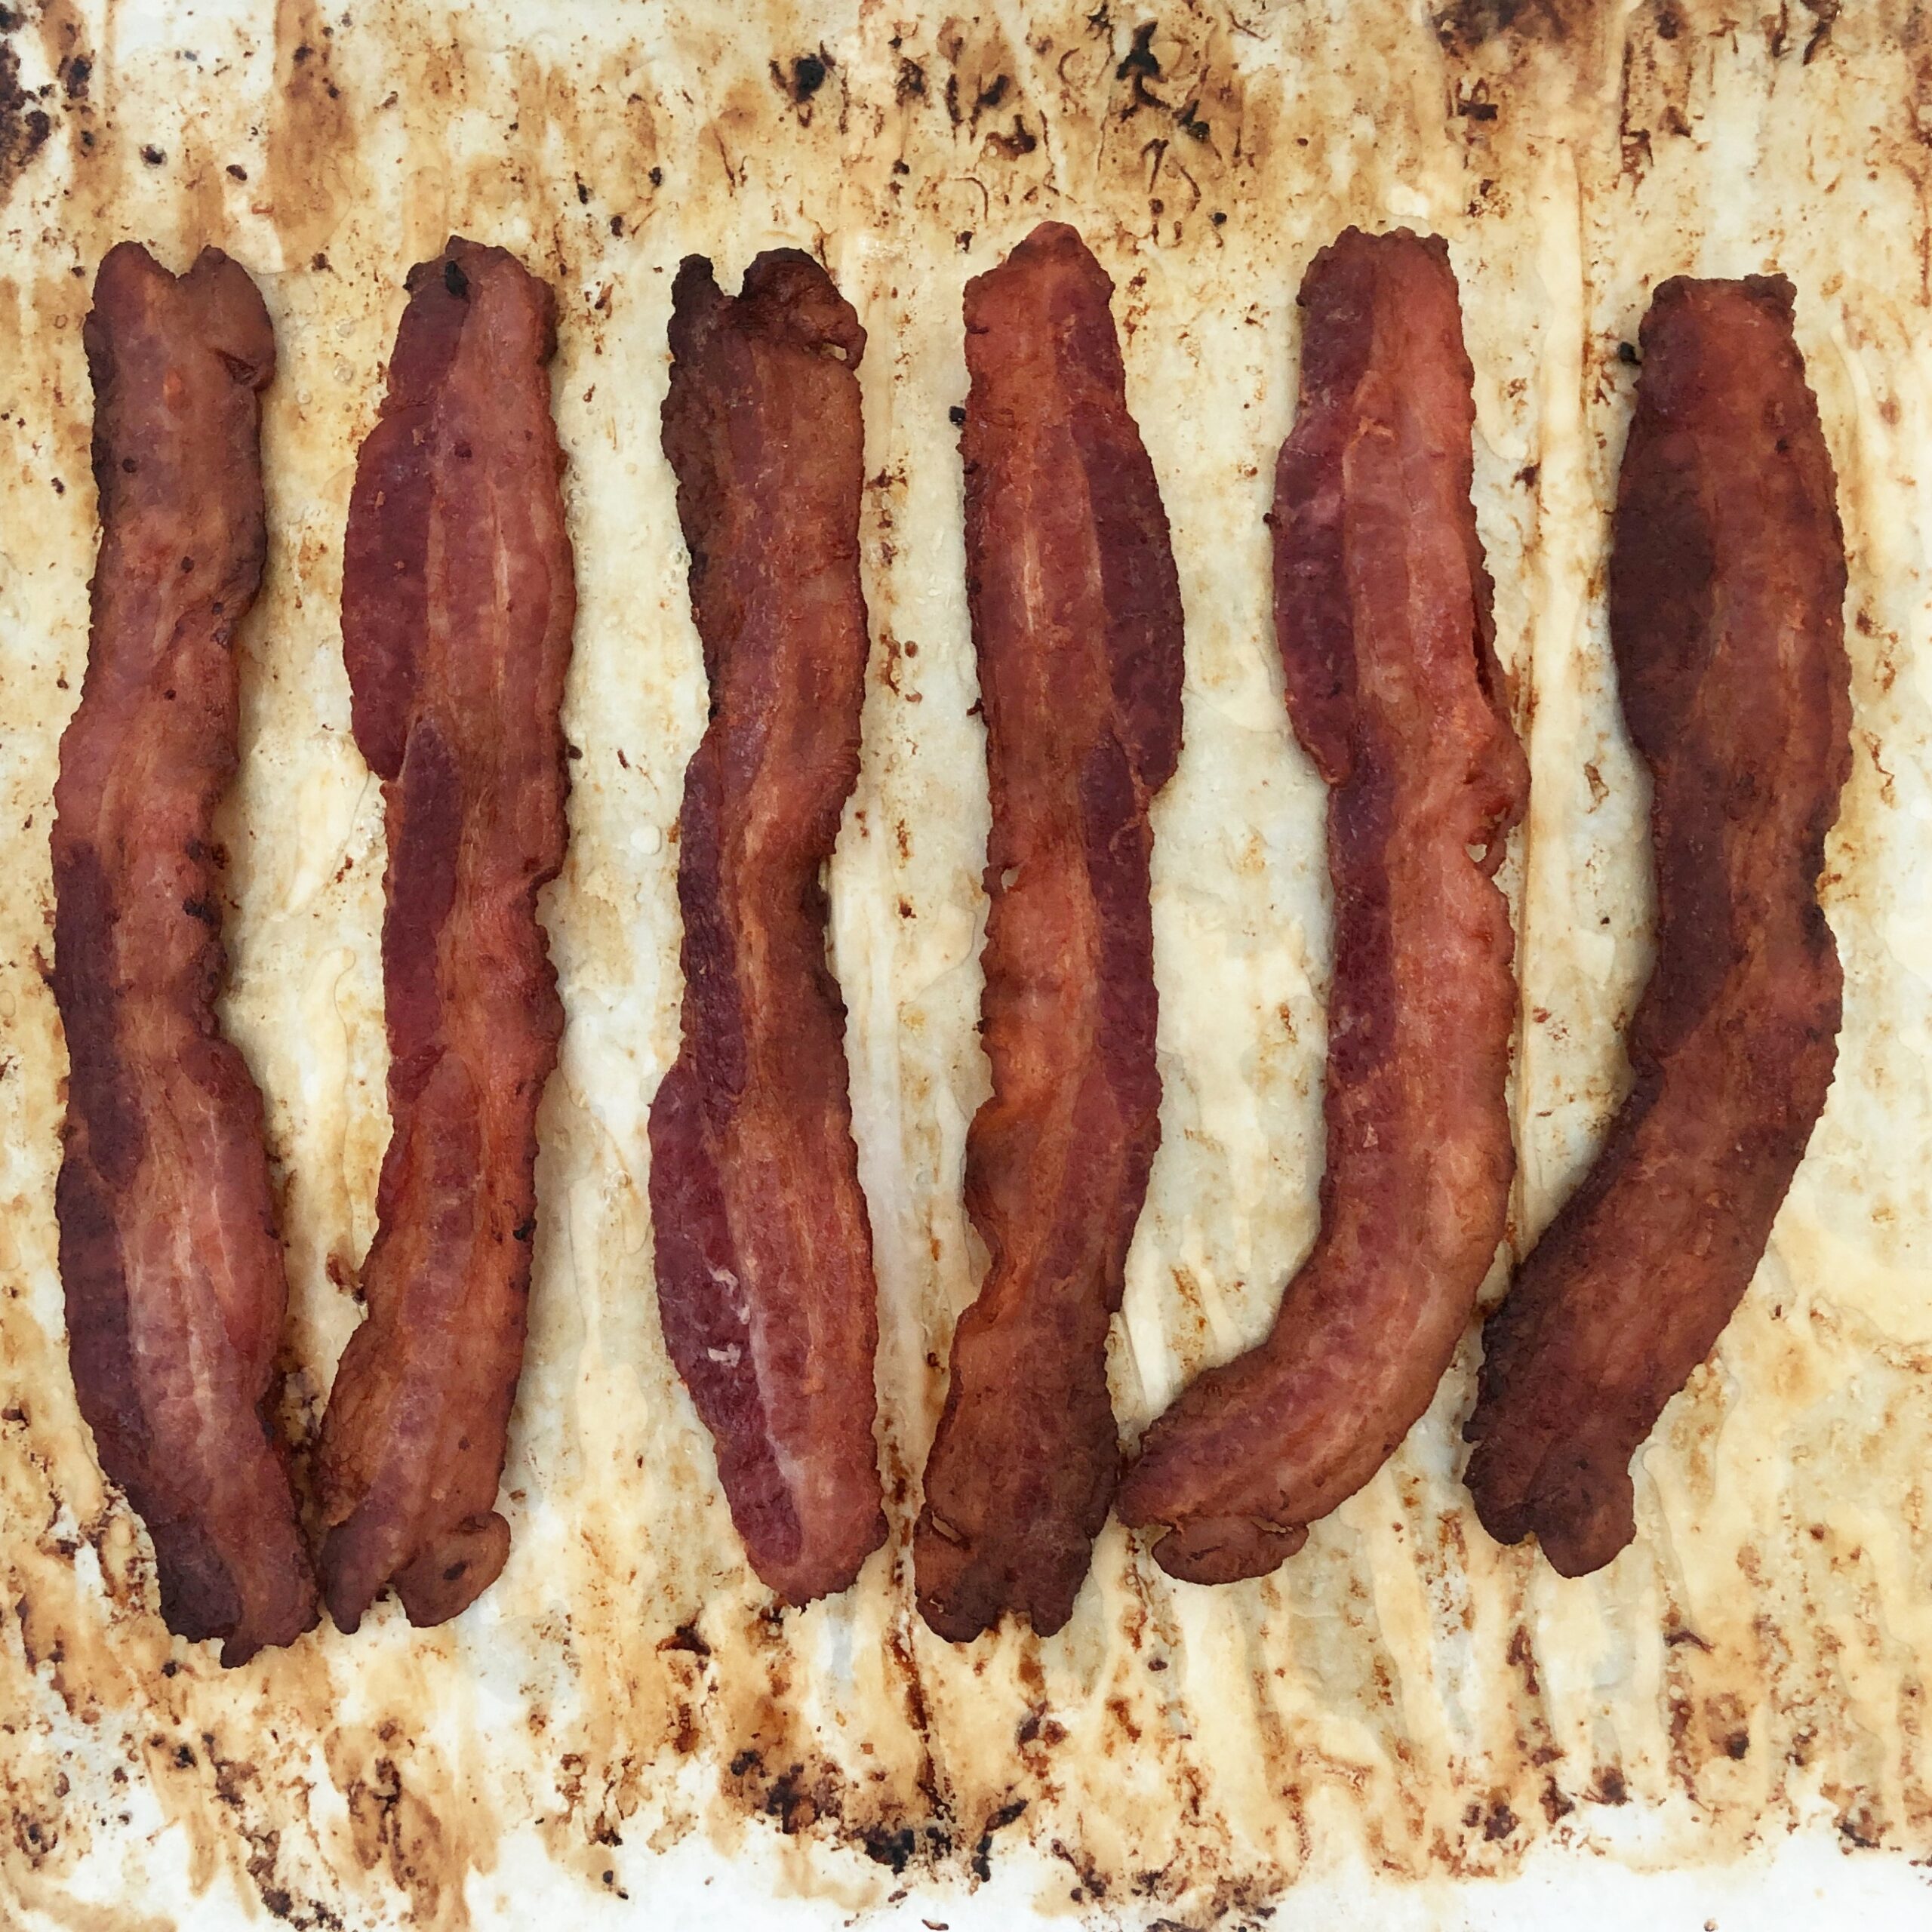 Oven Roasted Bacon - Alton Brown